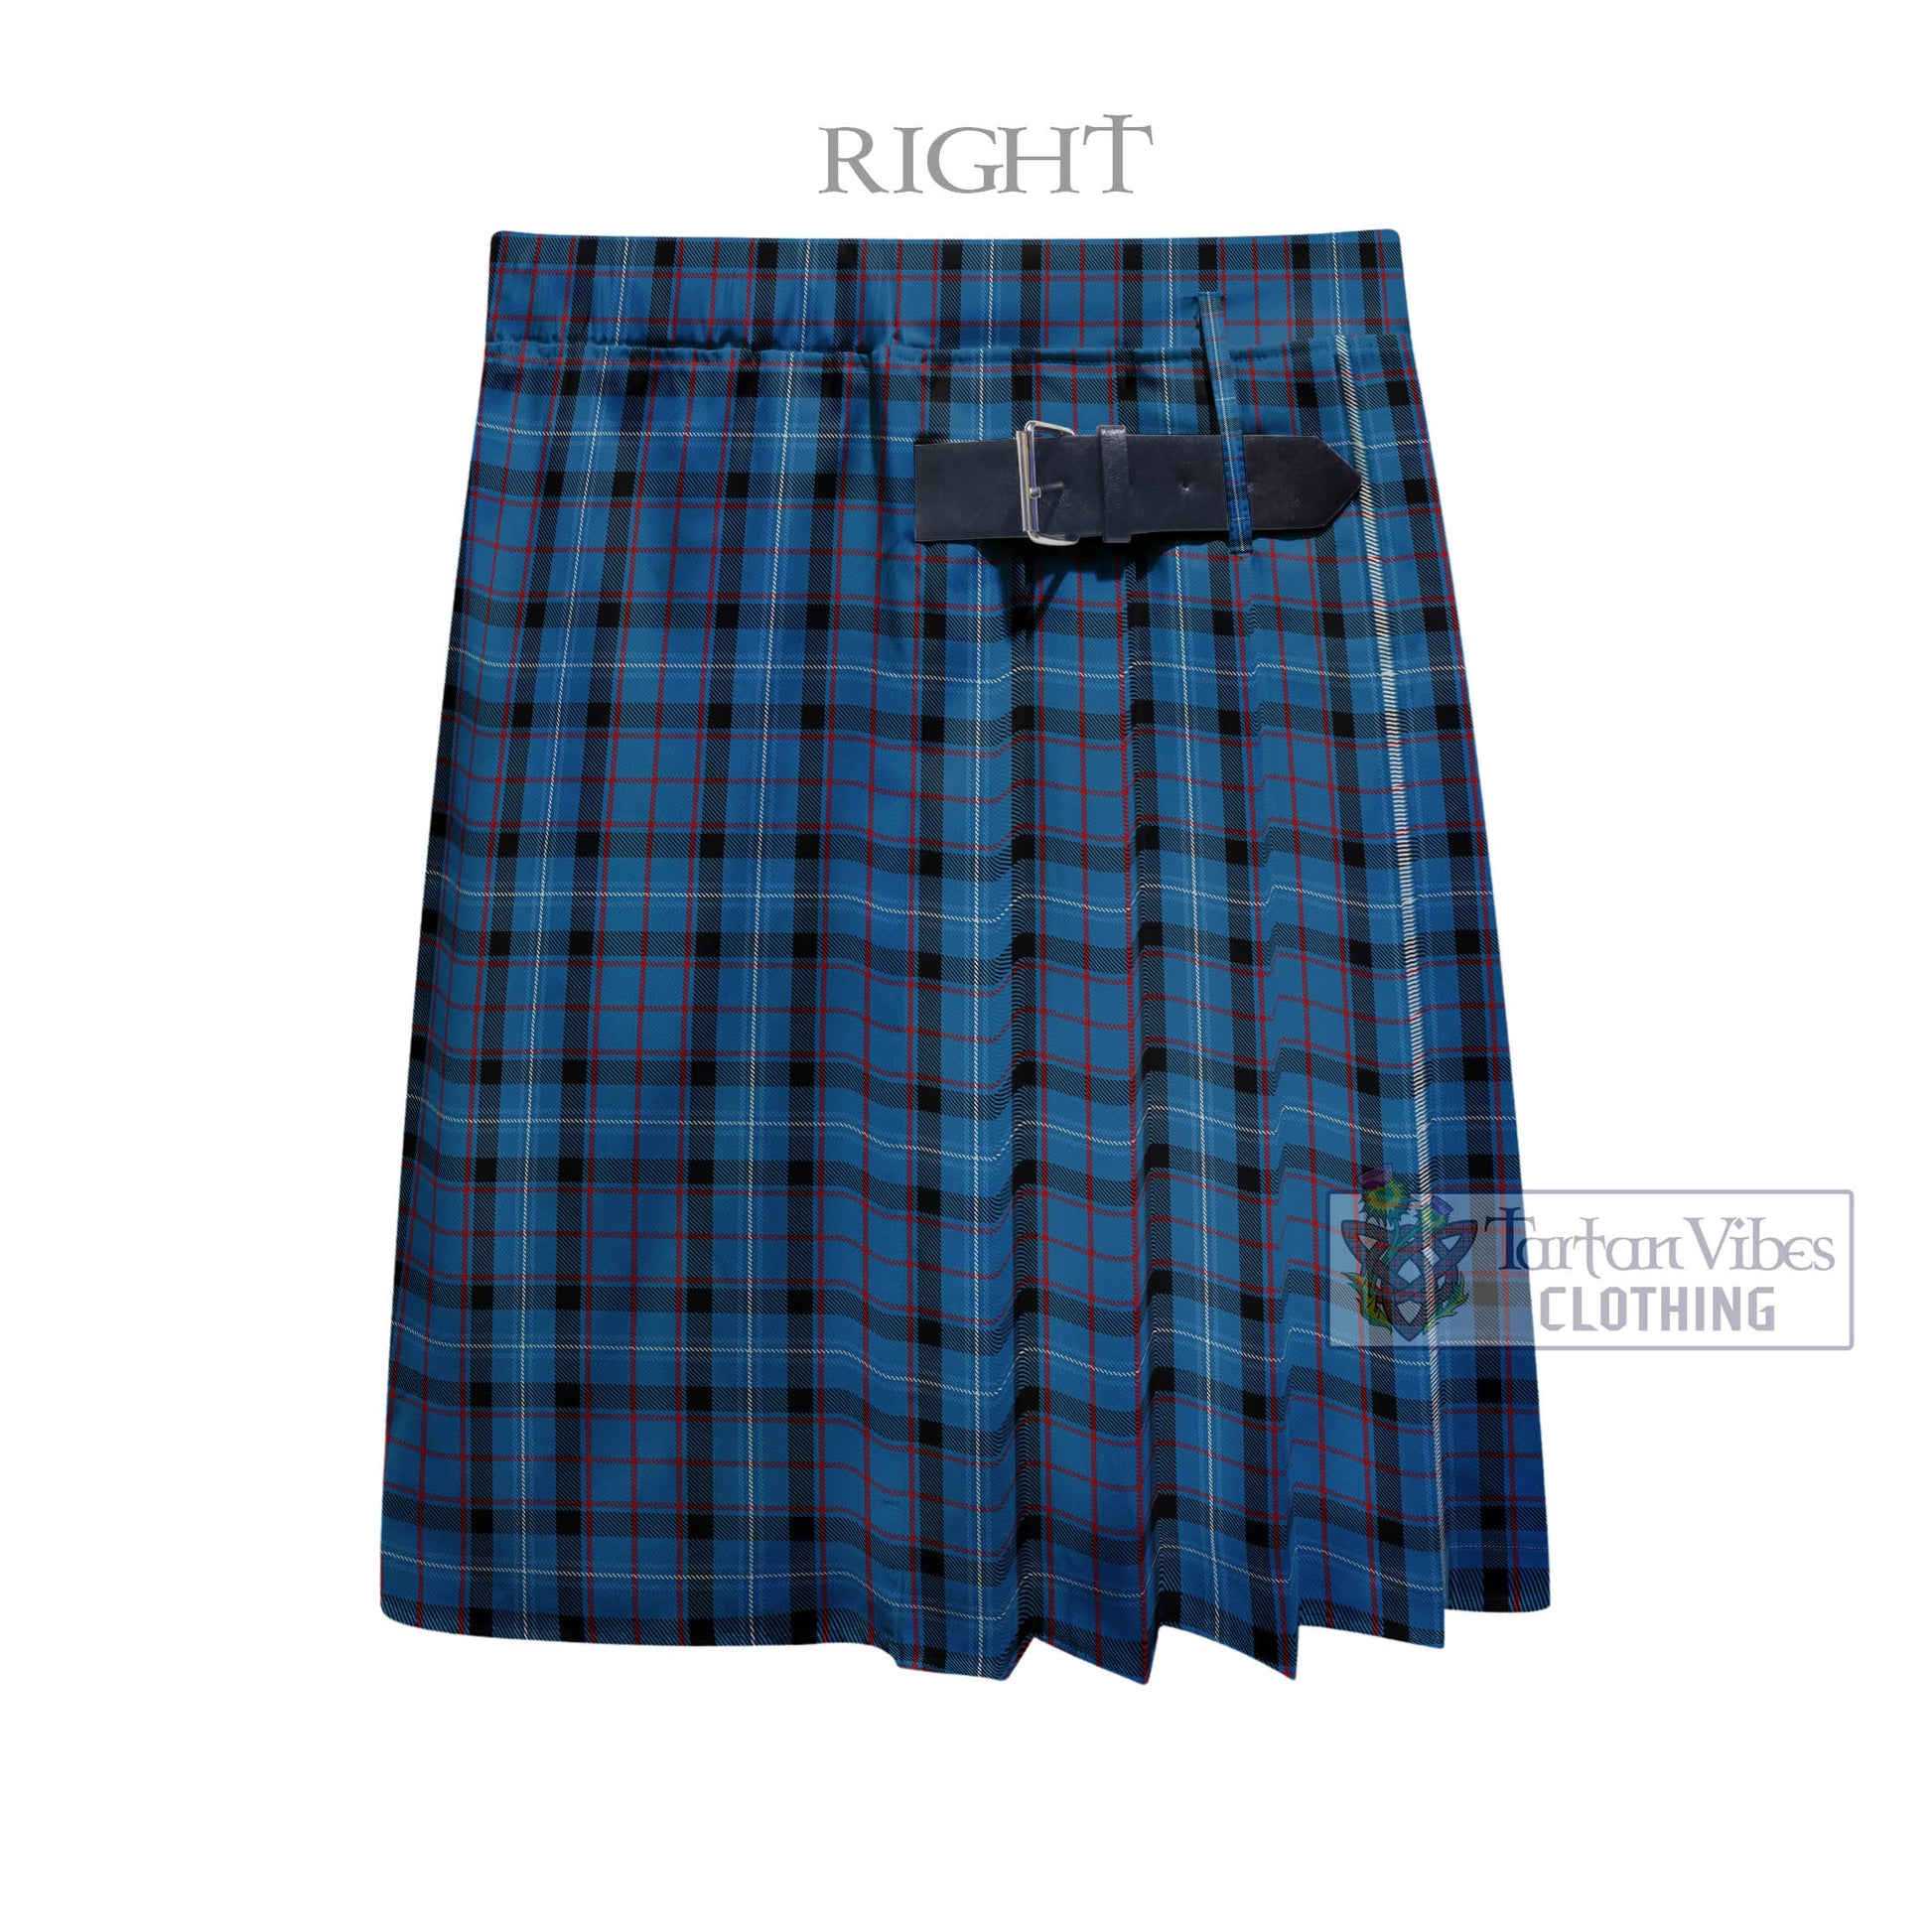 Tartan Vibes Clothing Fitzgerald Family Tartan Men's Pleated Skirt - Fashion Casual Retro Scottish Style